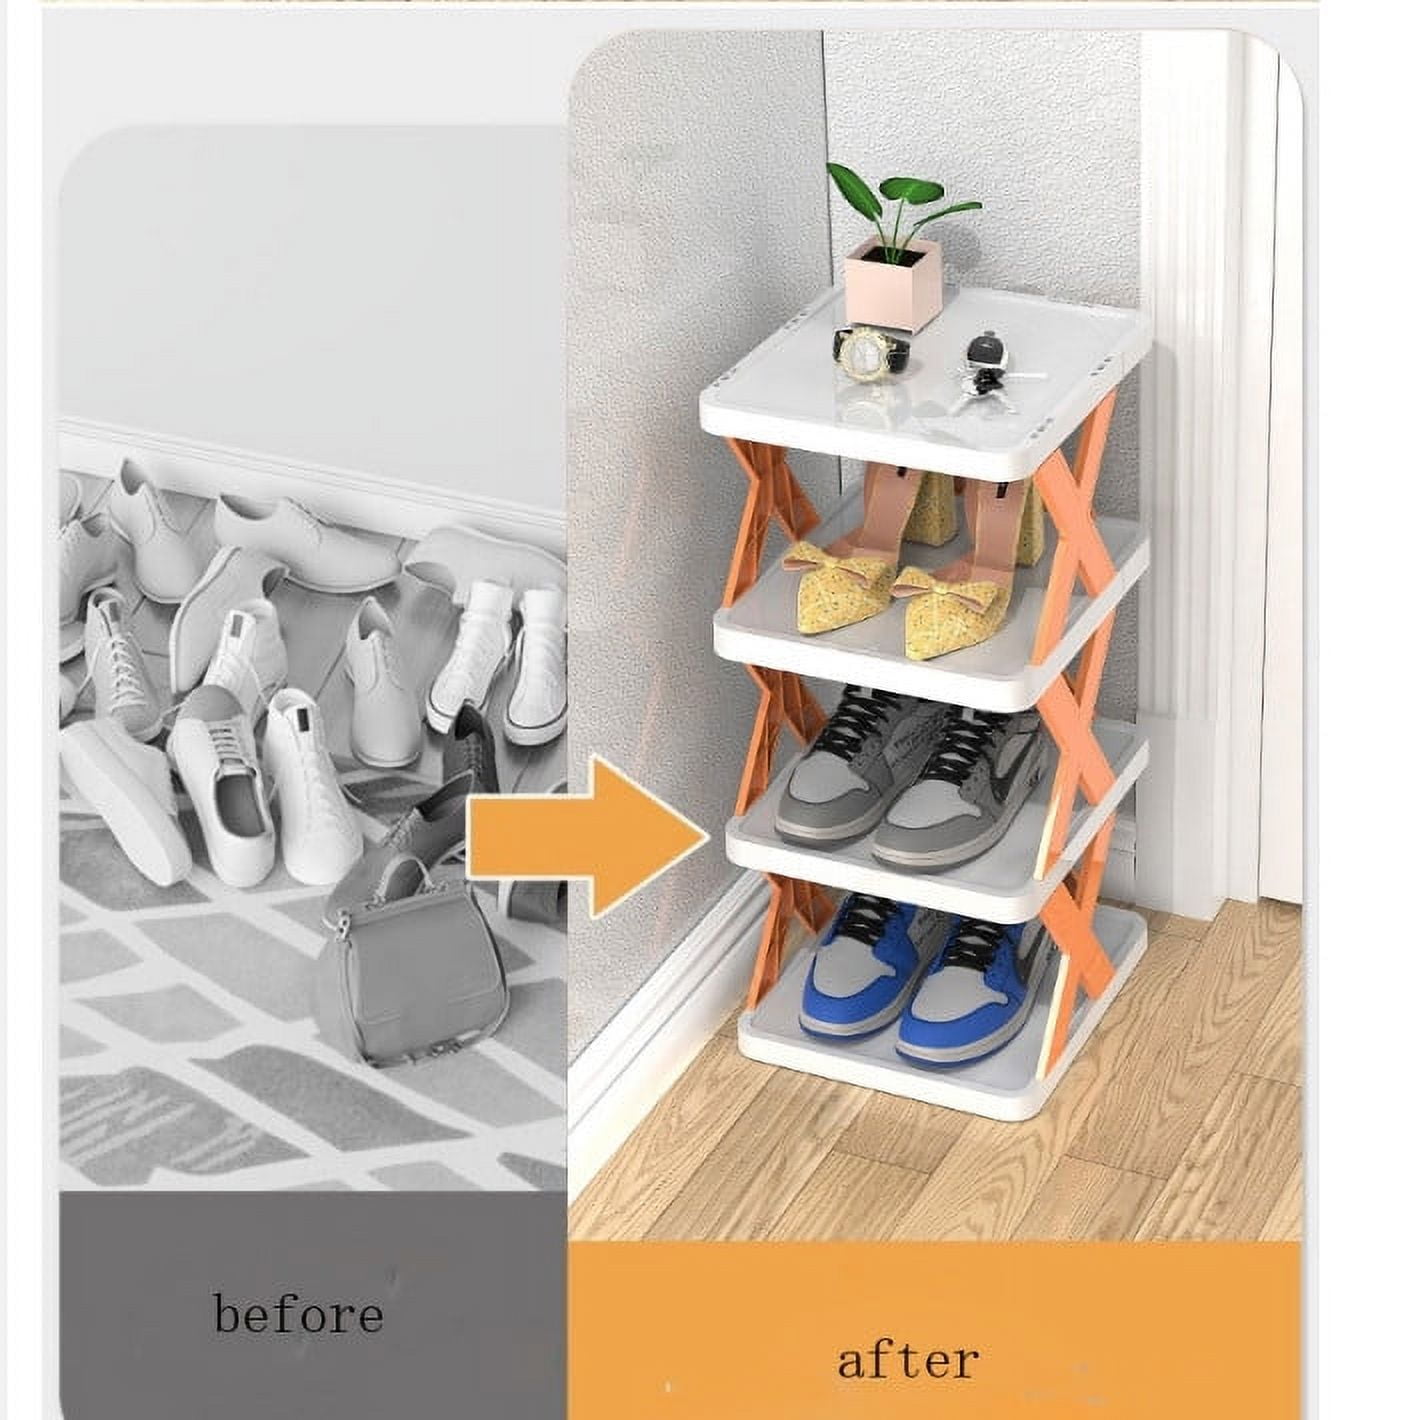 Calmootey 9 Tier Shoe Rack Organizer,Portable Shoe Shelf with Nonwoven  Fabric Cover for Closet Hallway,Bedroom,Entryway,Grey